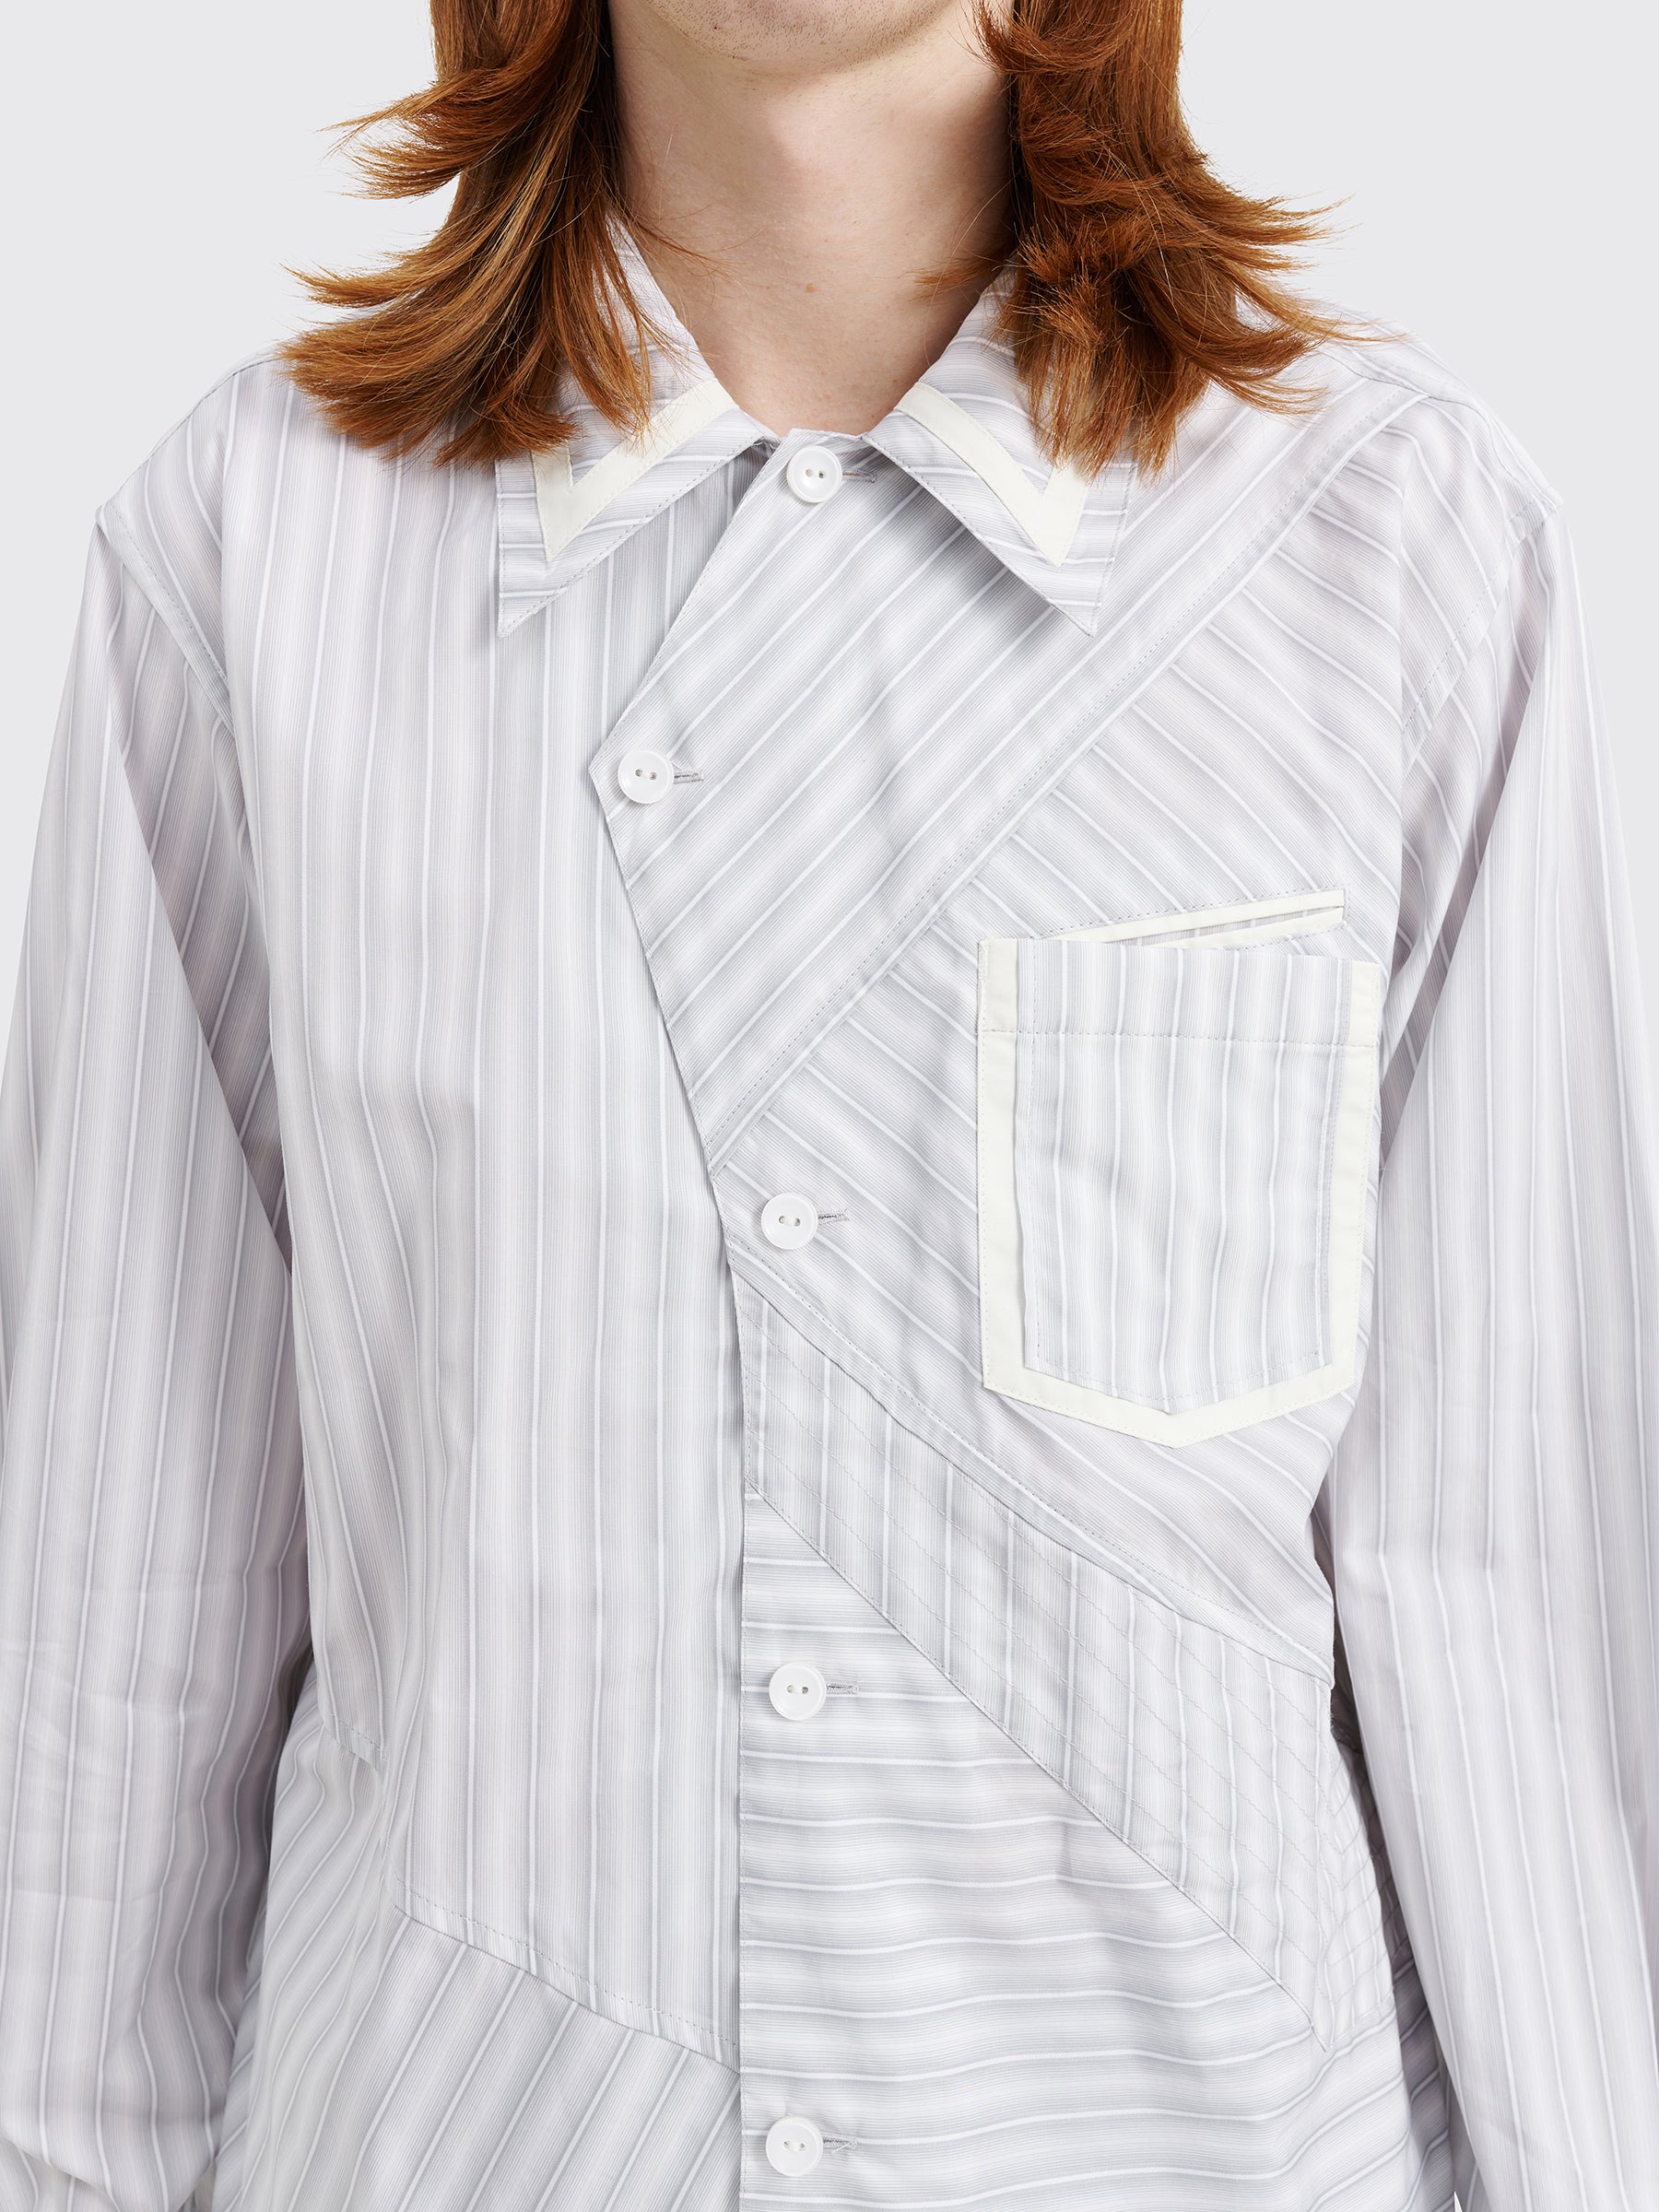 Kiko Kostadinov Aspasia Shirt Twill Light Grey Stripes